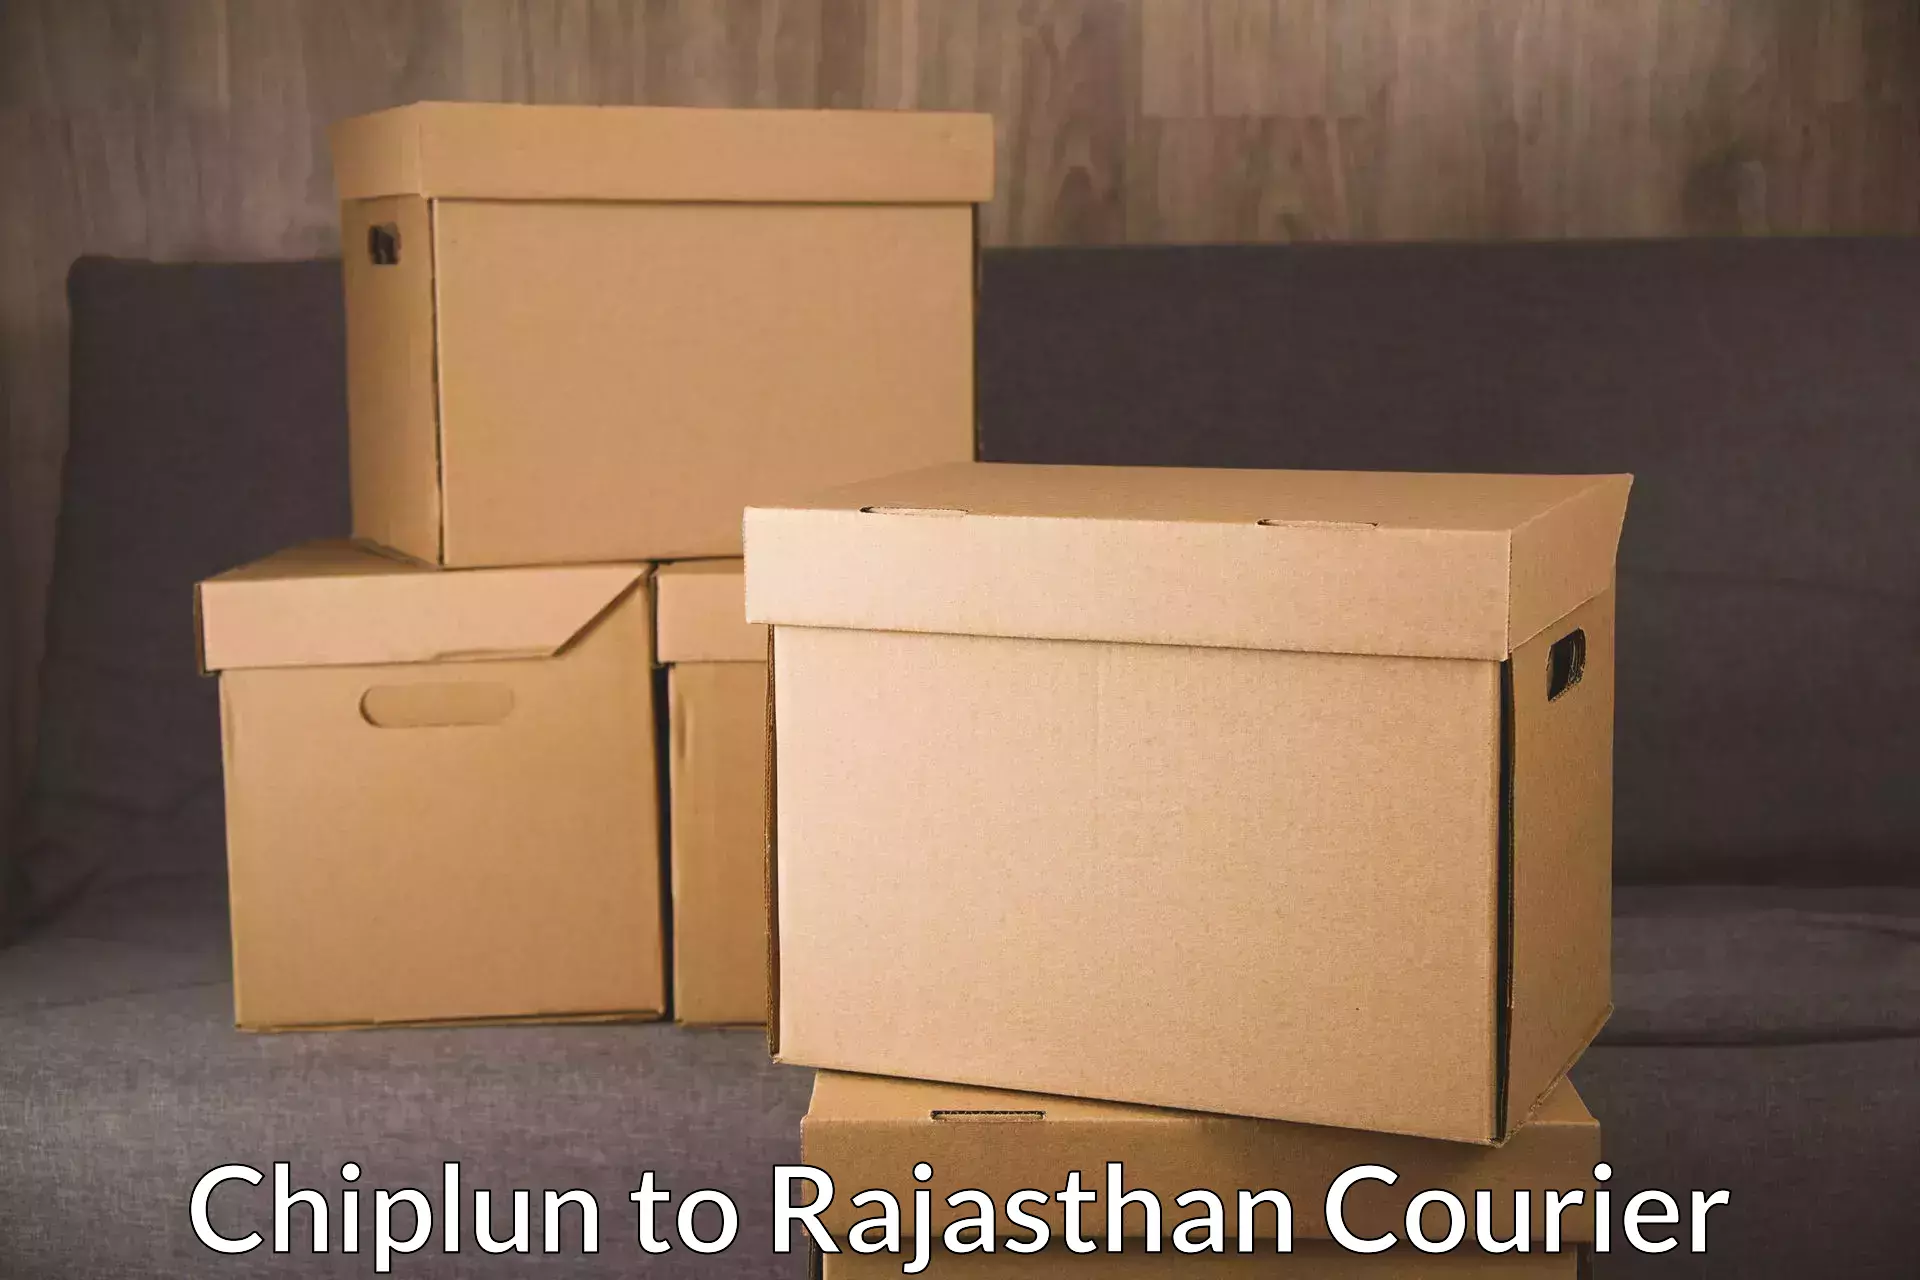 Courier service comparison in Chiplun to Raipur Pali